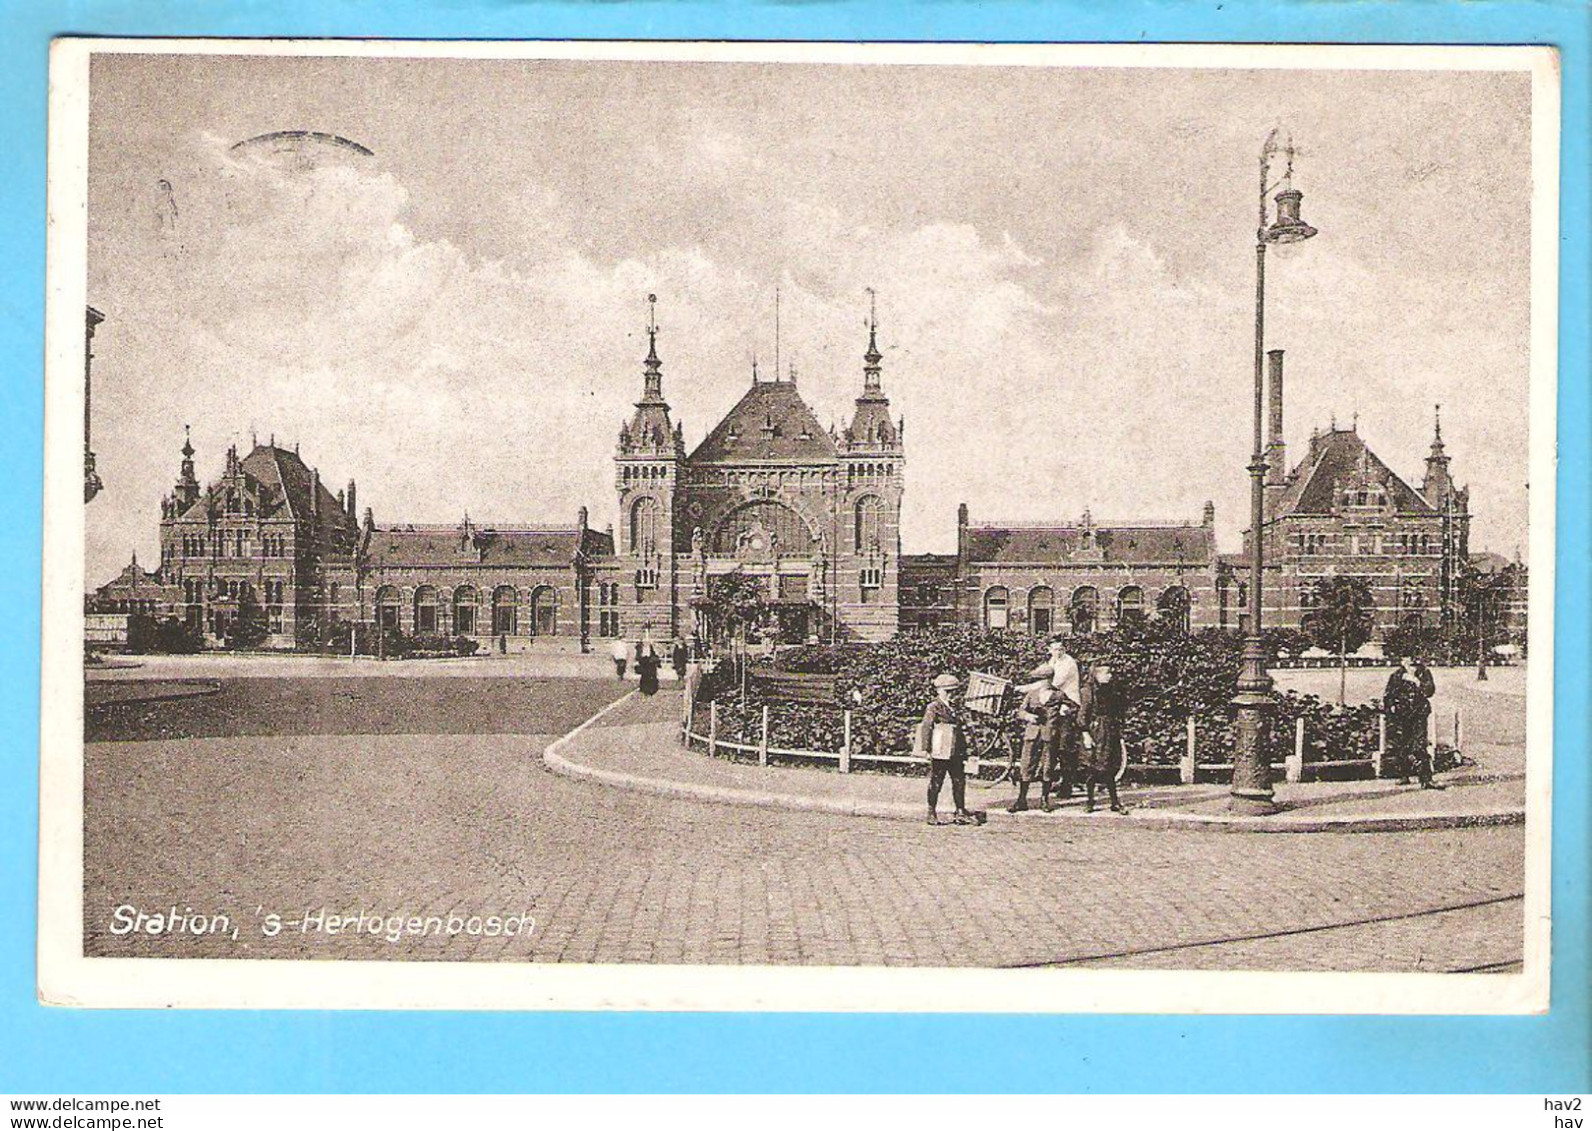 Hertogenbosch Station 1930 RY57323 - 's-Hertogenbosch